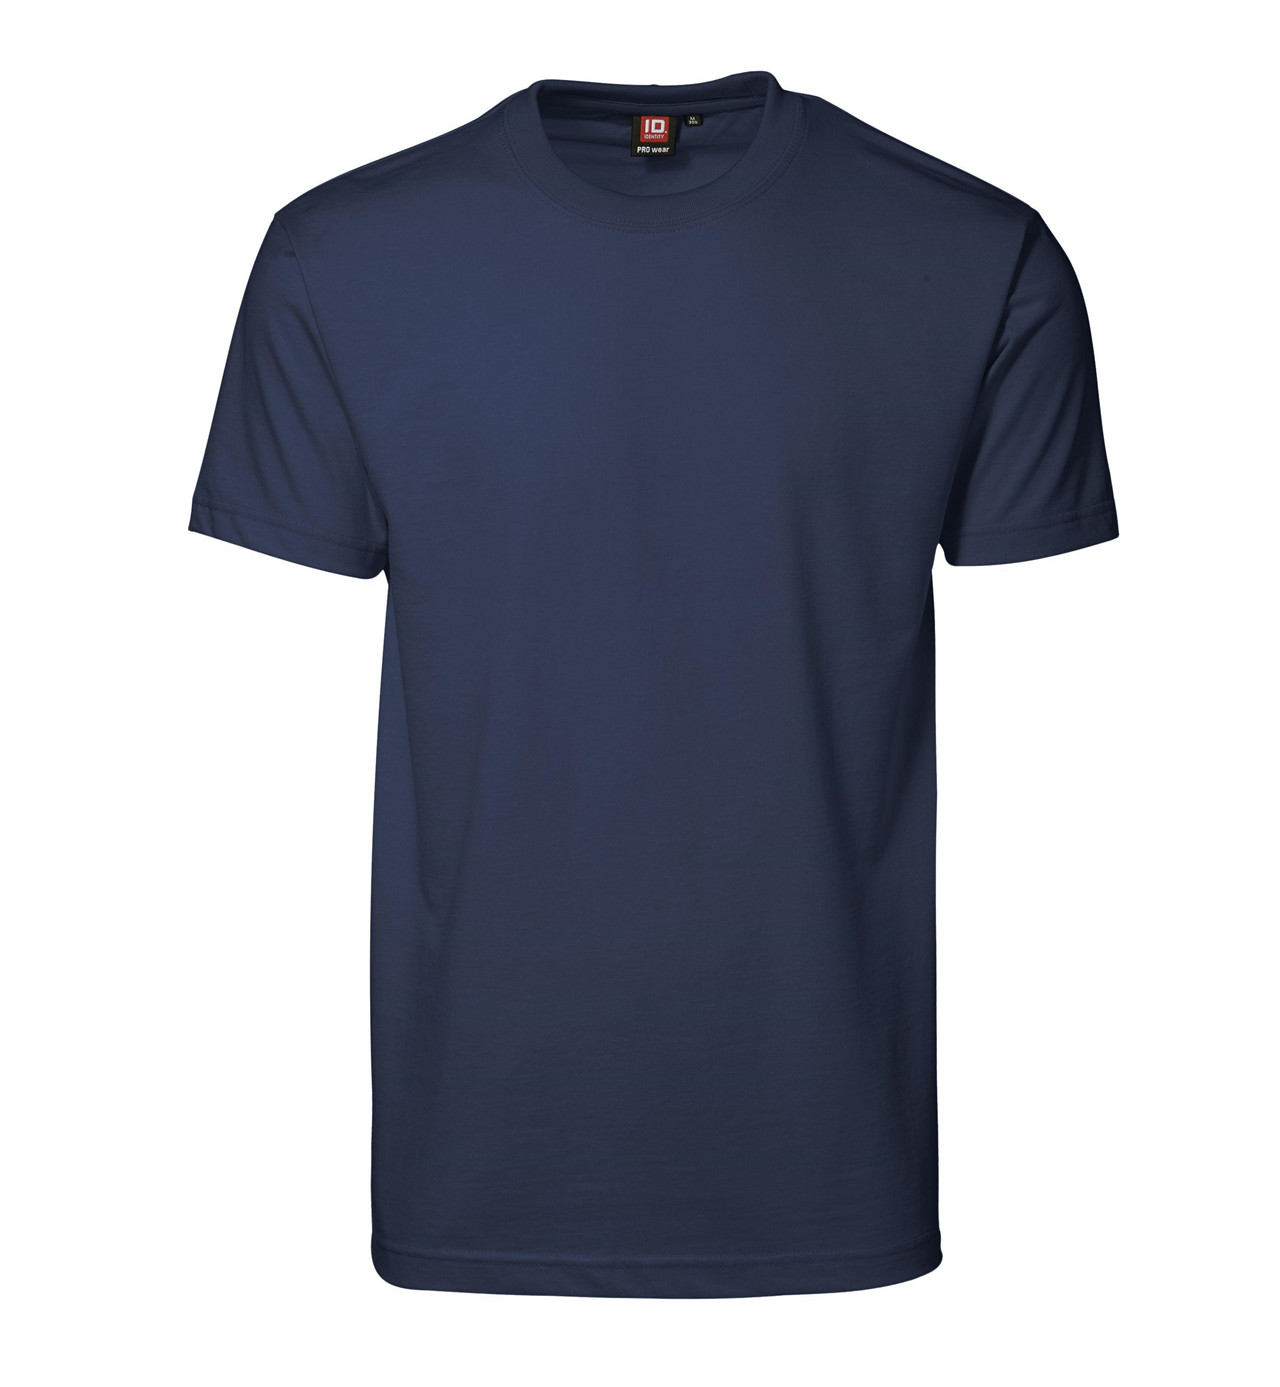 ID PRO Wear T-shirt til Herre (Navy, 4XL)